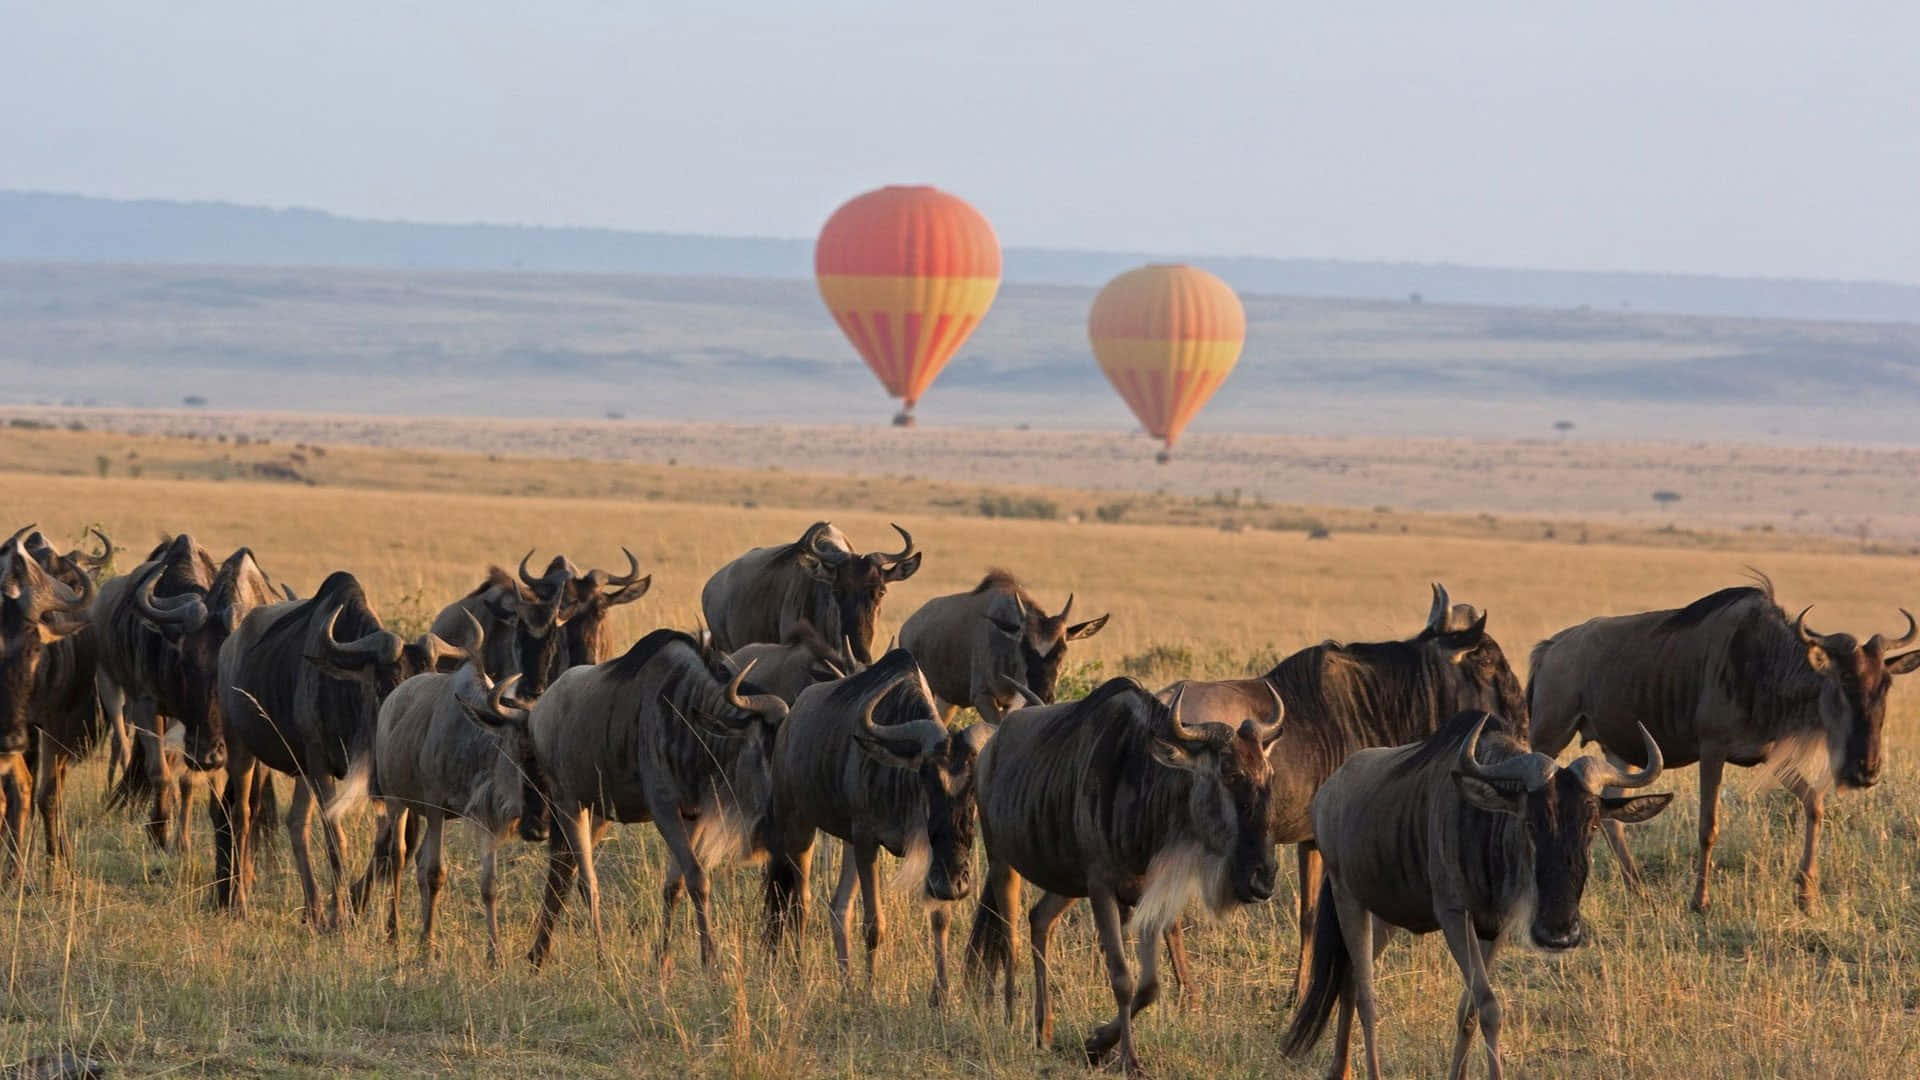 Serengeti National Park Wildebeests Hot Air Balloons Wallpaper